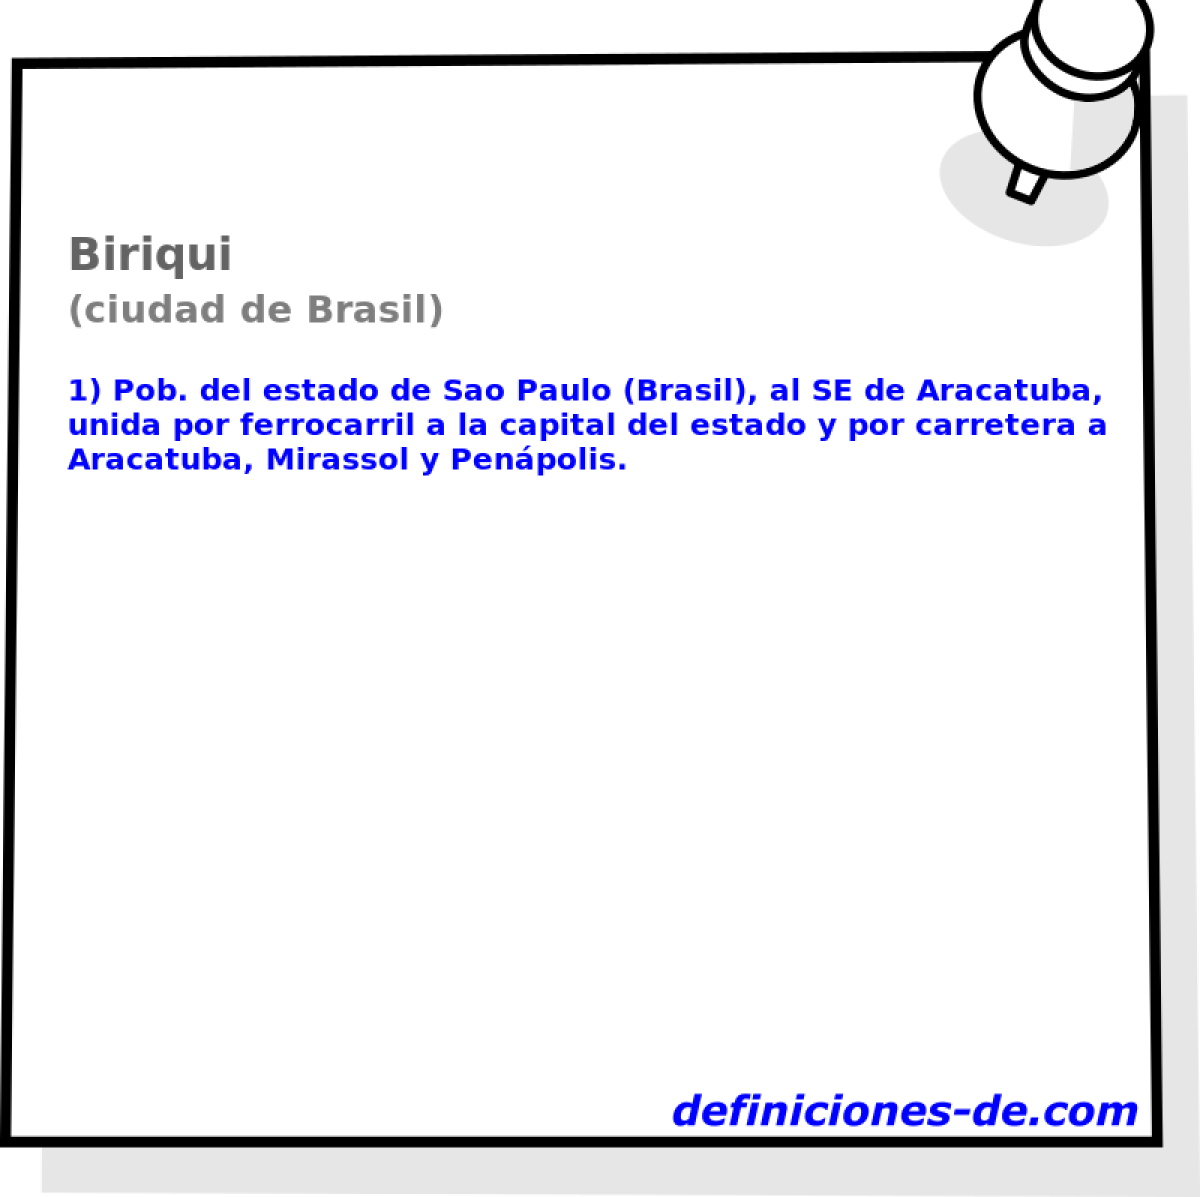 Biriqui (ciudad de Brasil)